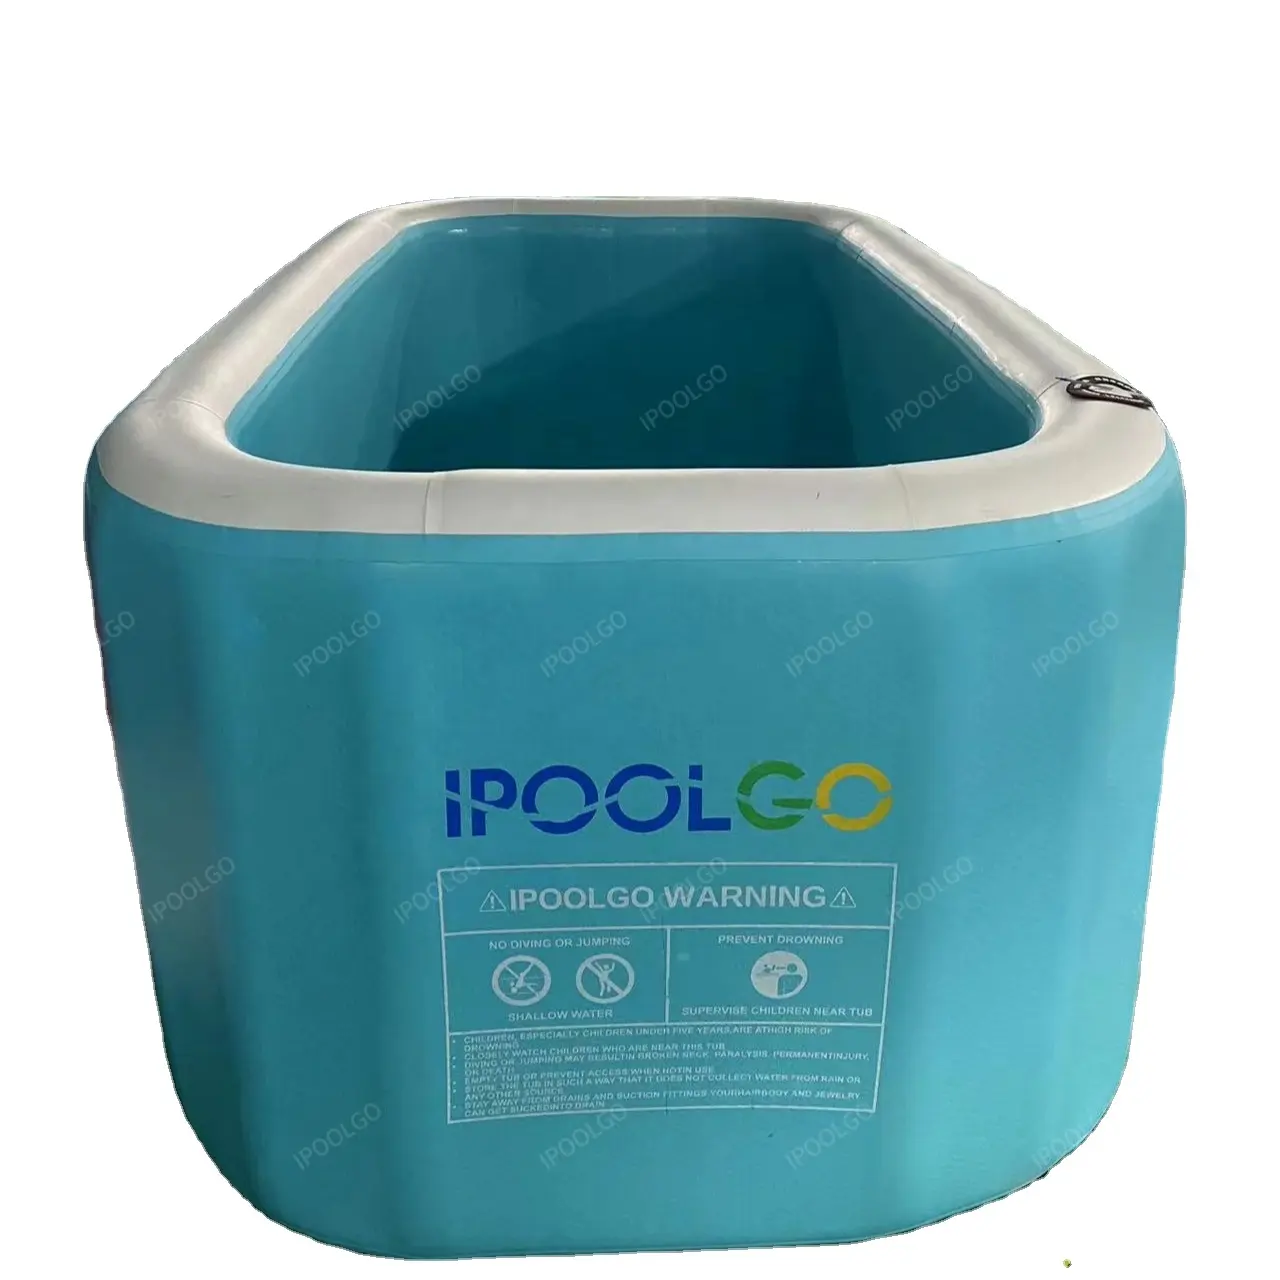 IPOOLGO nuovo design popolare vasca idromassaggio gonfiabile spa forma quadrata all'aperto AirJet vasca idromassaggio